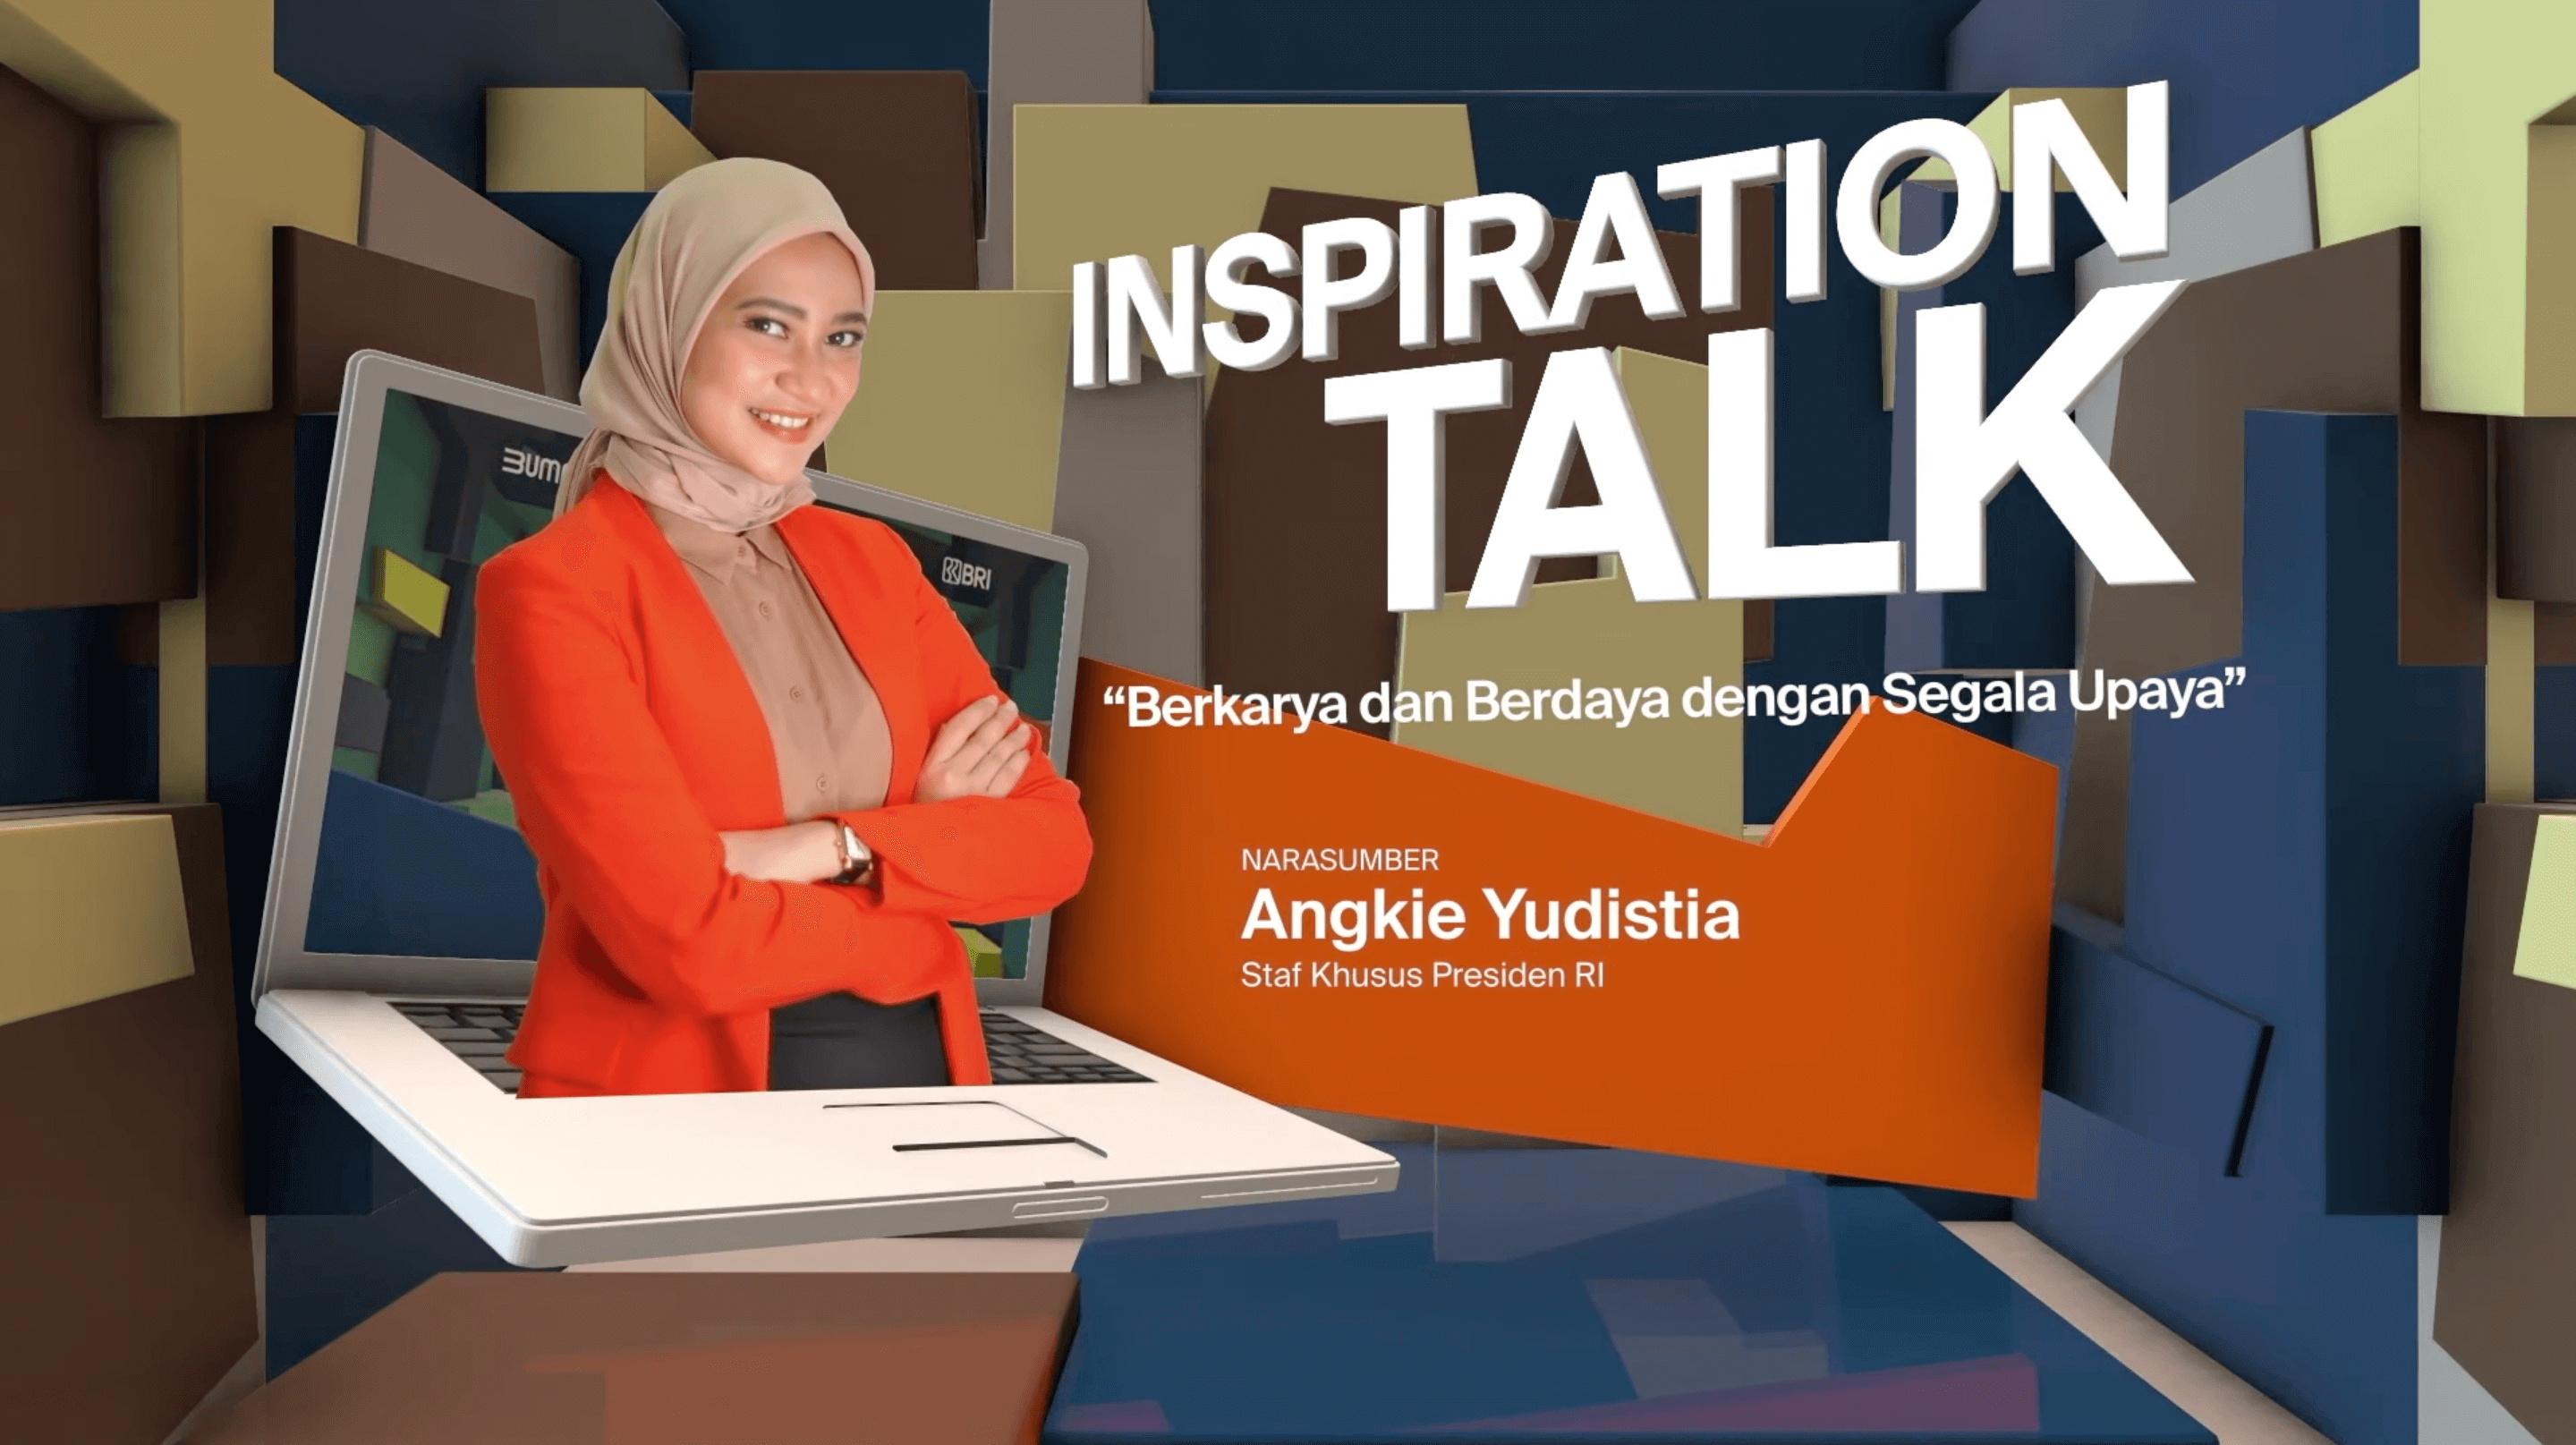 Inspiration Talk